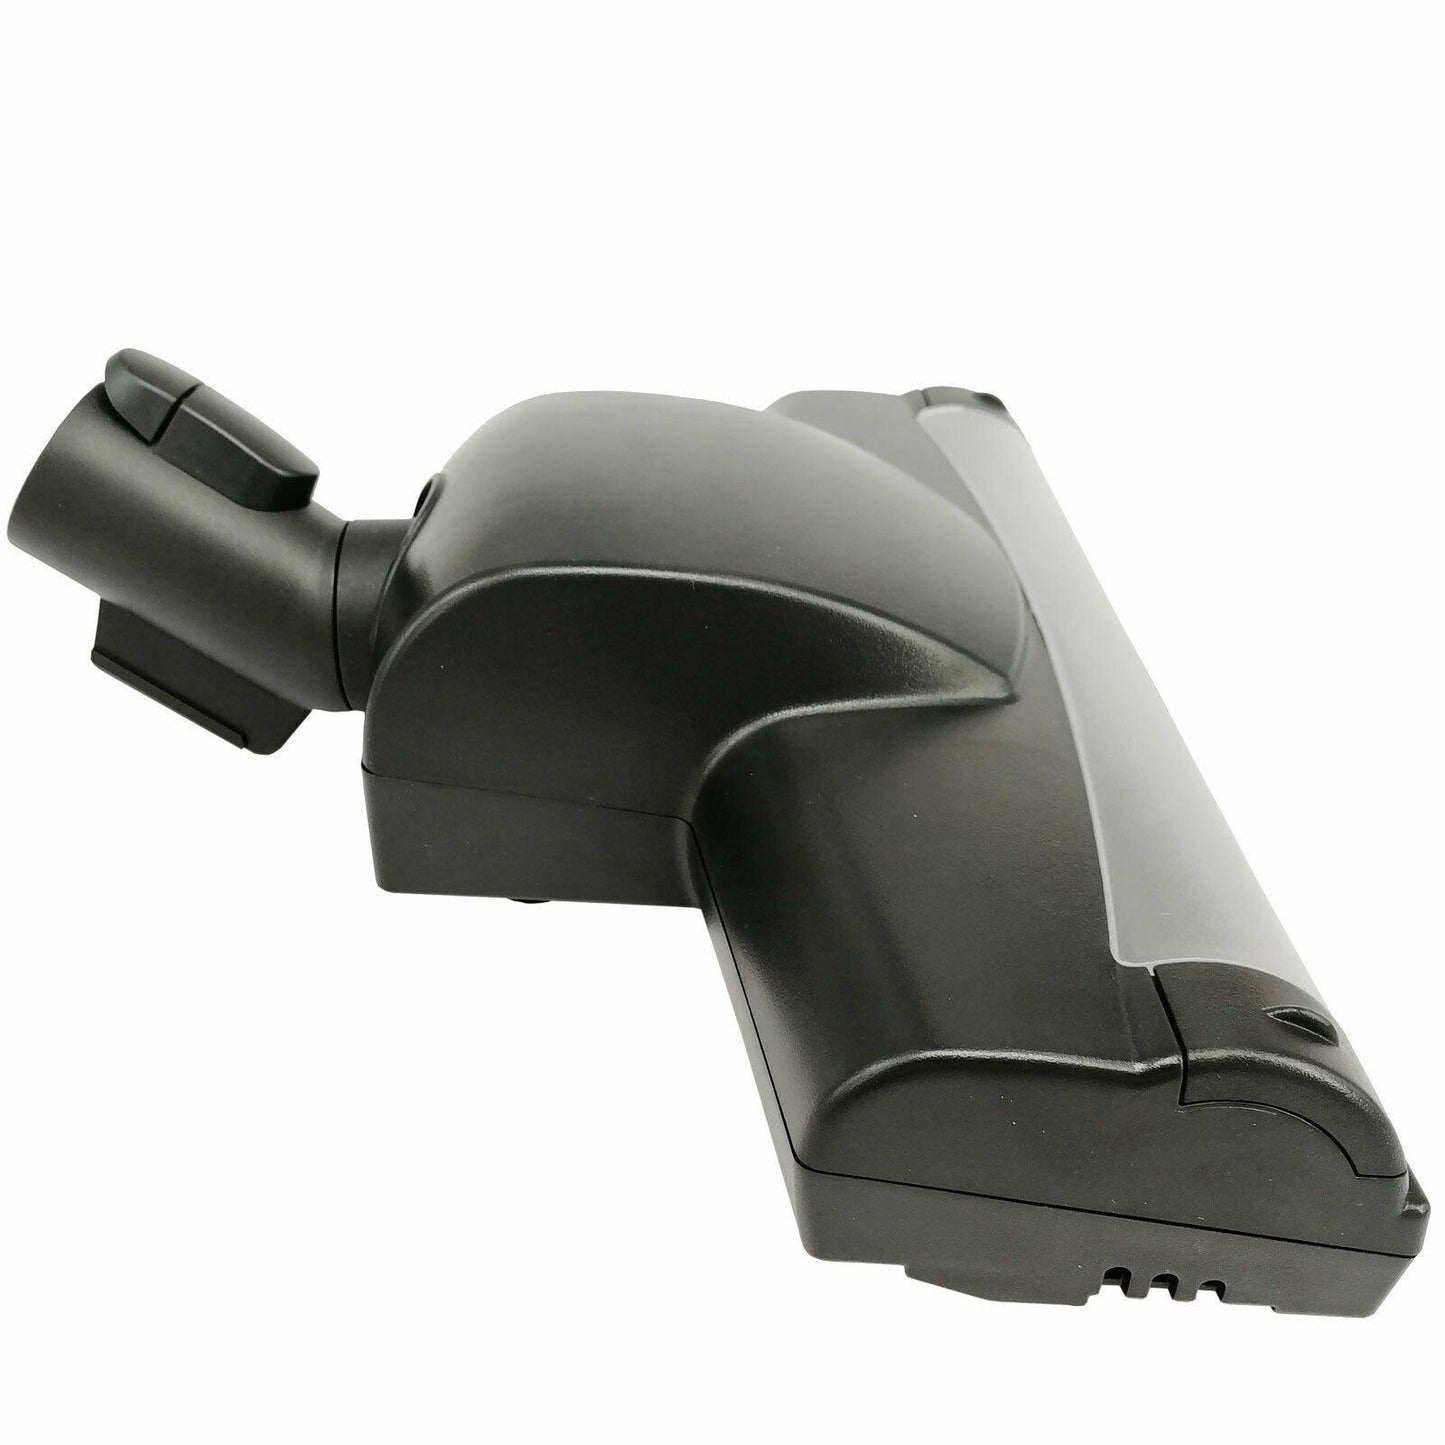 Interlock Turbo Floor Head Nozzle Tool For Miele S5281 Exclusive Edition S5211 Sparesbarn